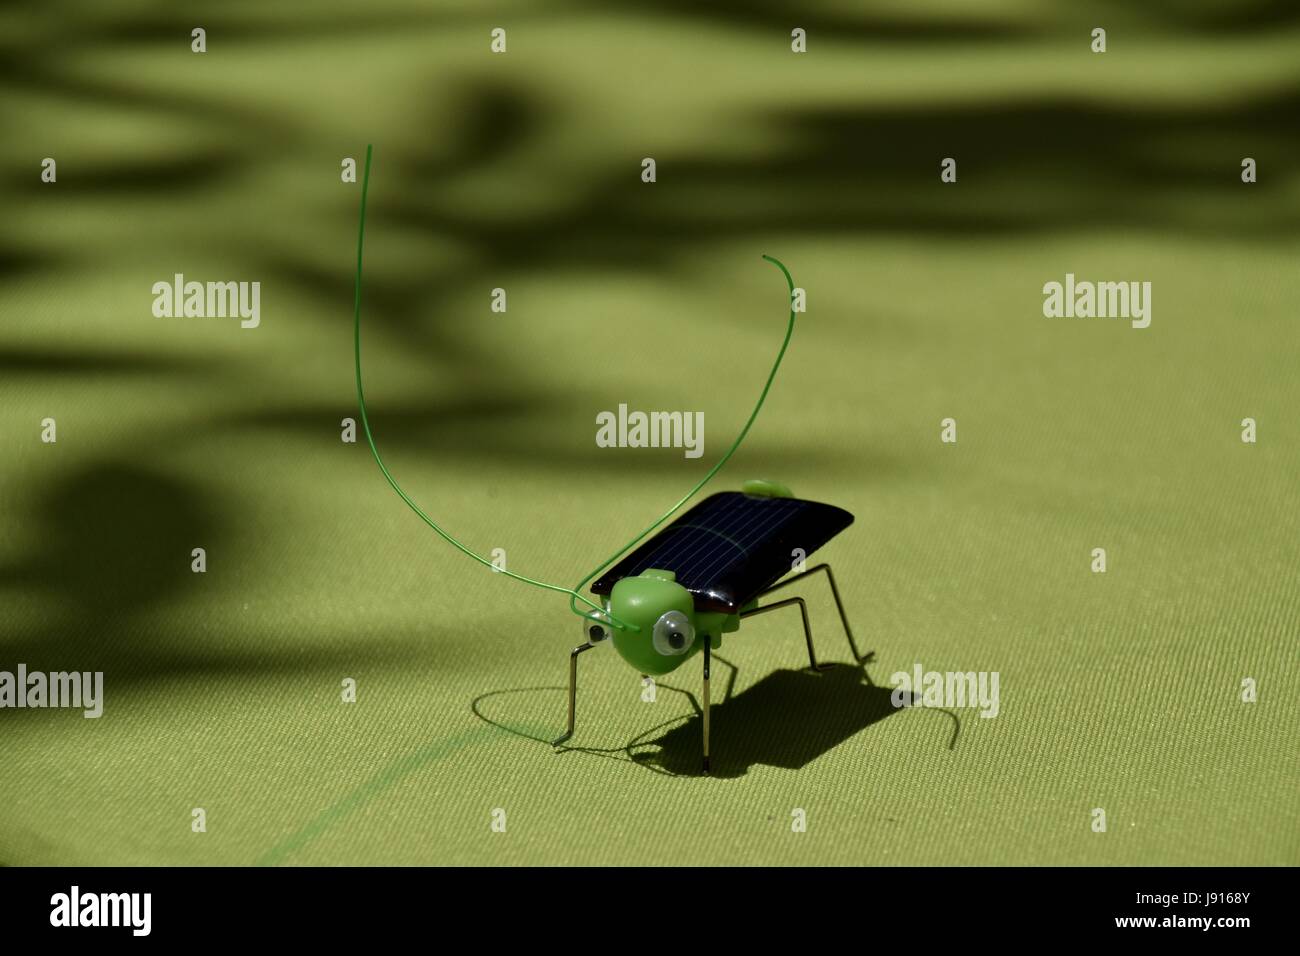 Solar Powered Grasshopper Toys, Environmental Protection Green